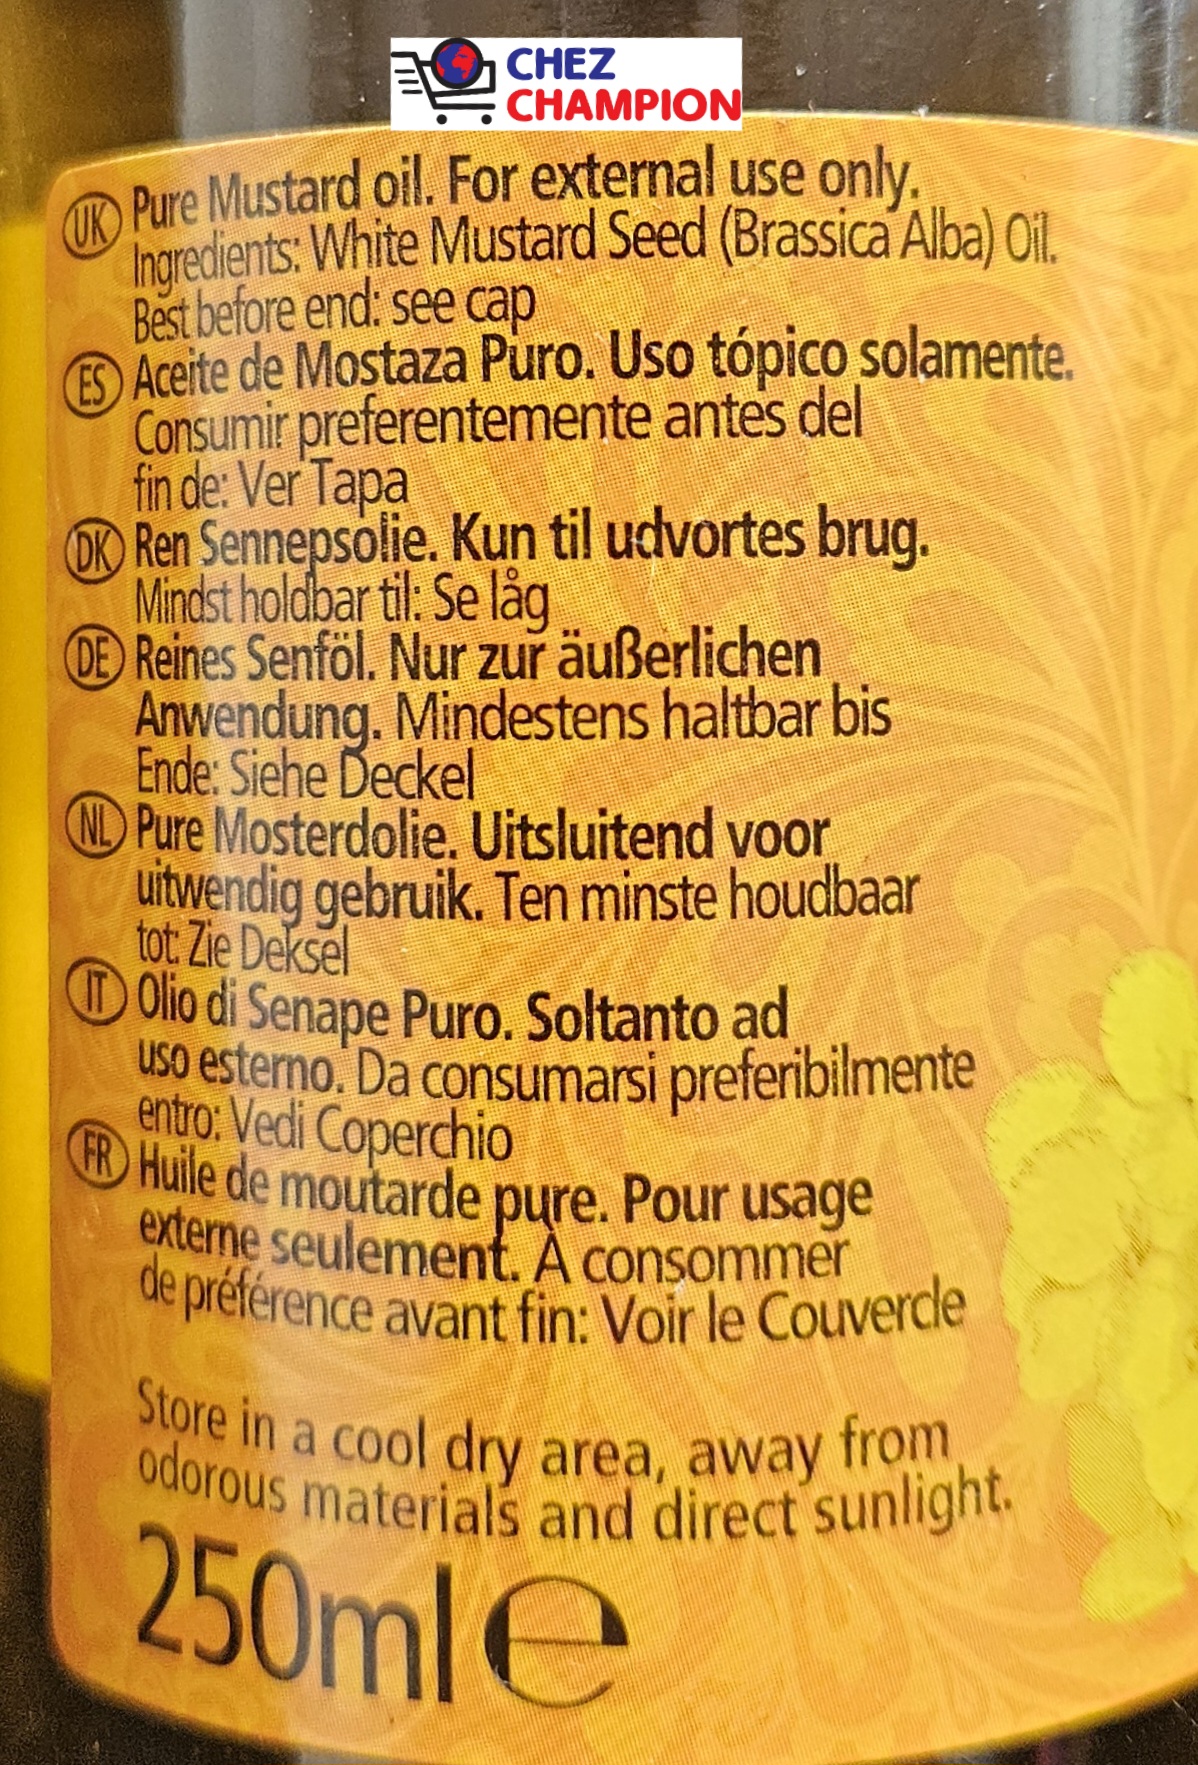 KTC 100% pure mustard oil external use only – huile de moutarde pure – 250ml